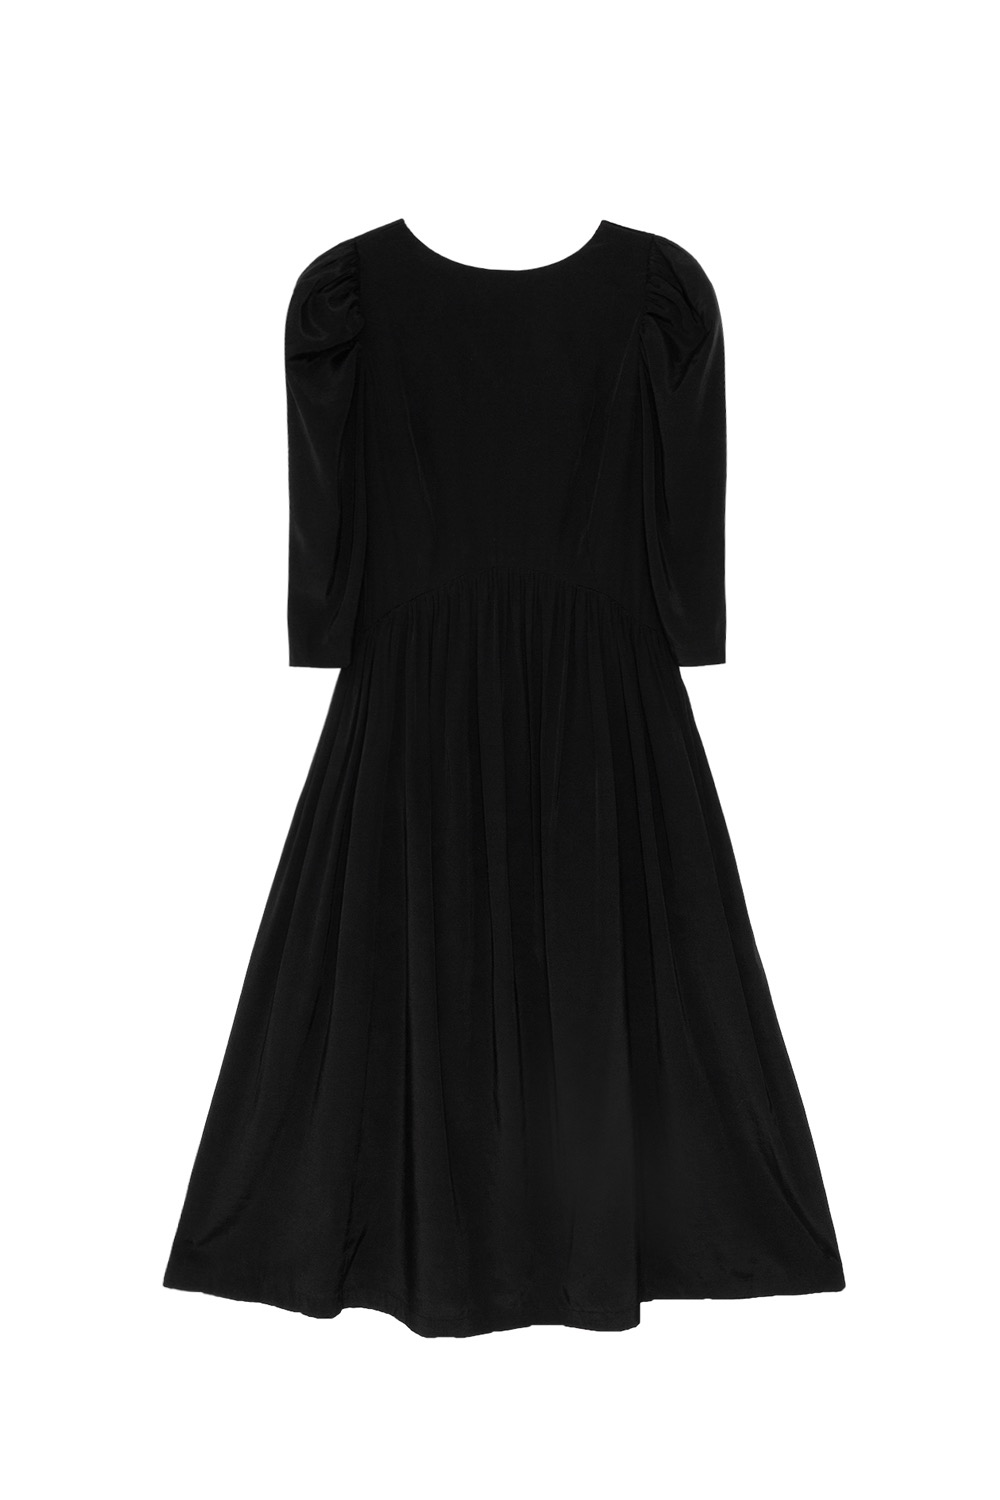 Diana satin dress(black)